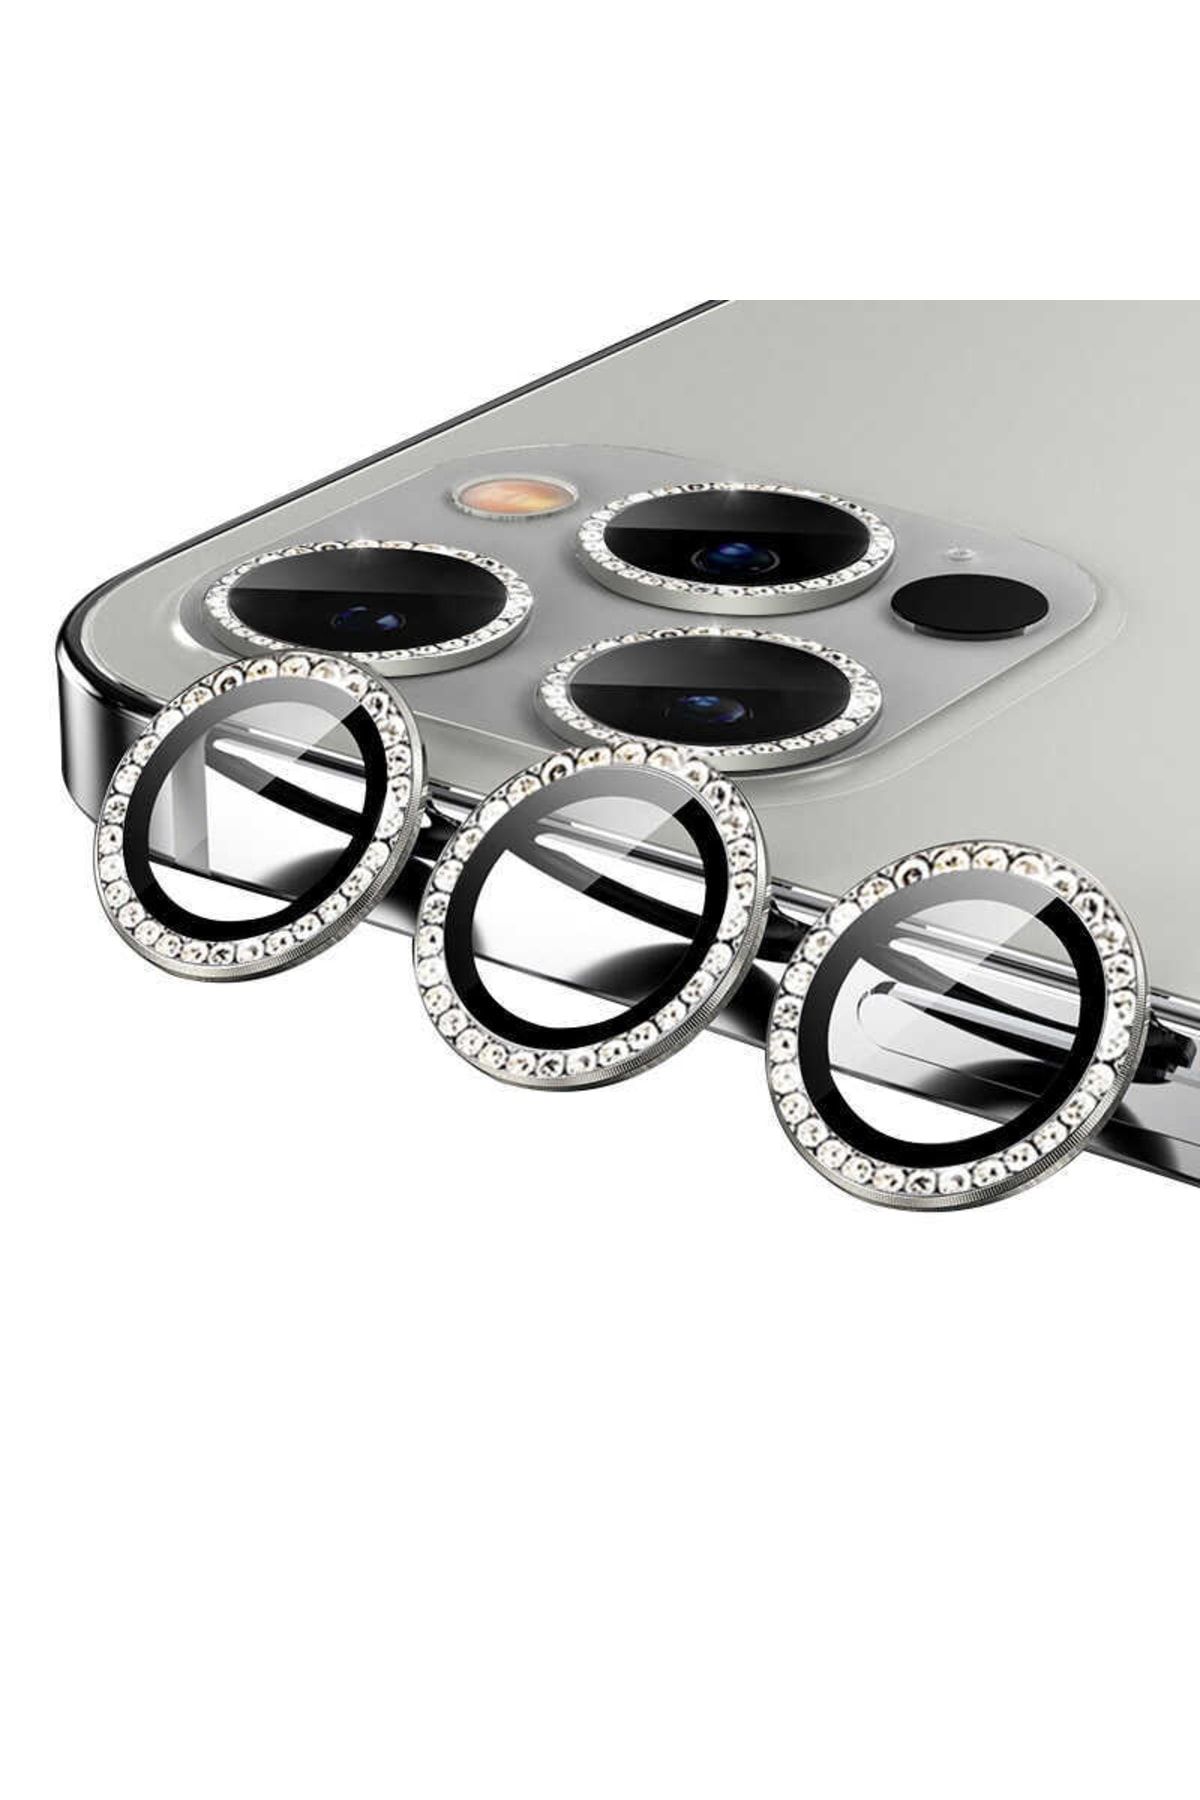 Fibaks Ipad Air 4 4.nesil 10.9 Inç Uyumlu Parlak Taşlı Kamera Koruyucu Işıltılı Kamera Lens Koruma